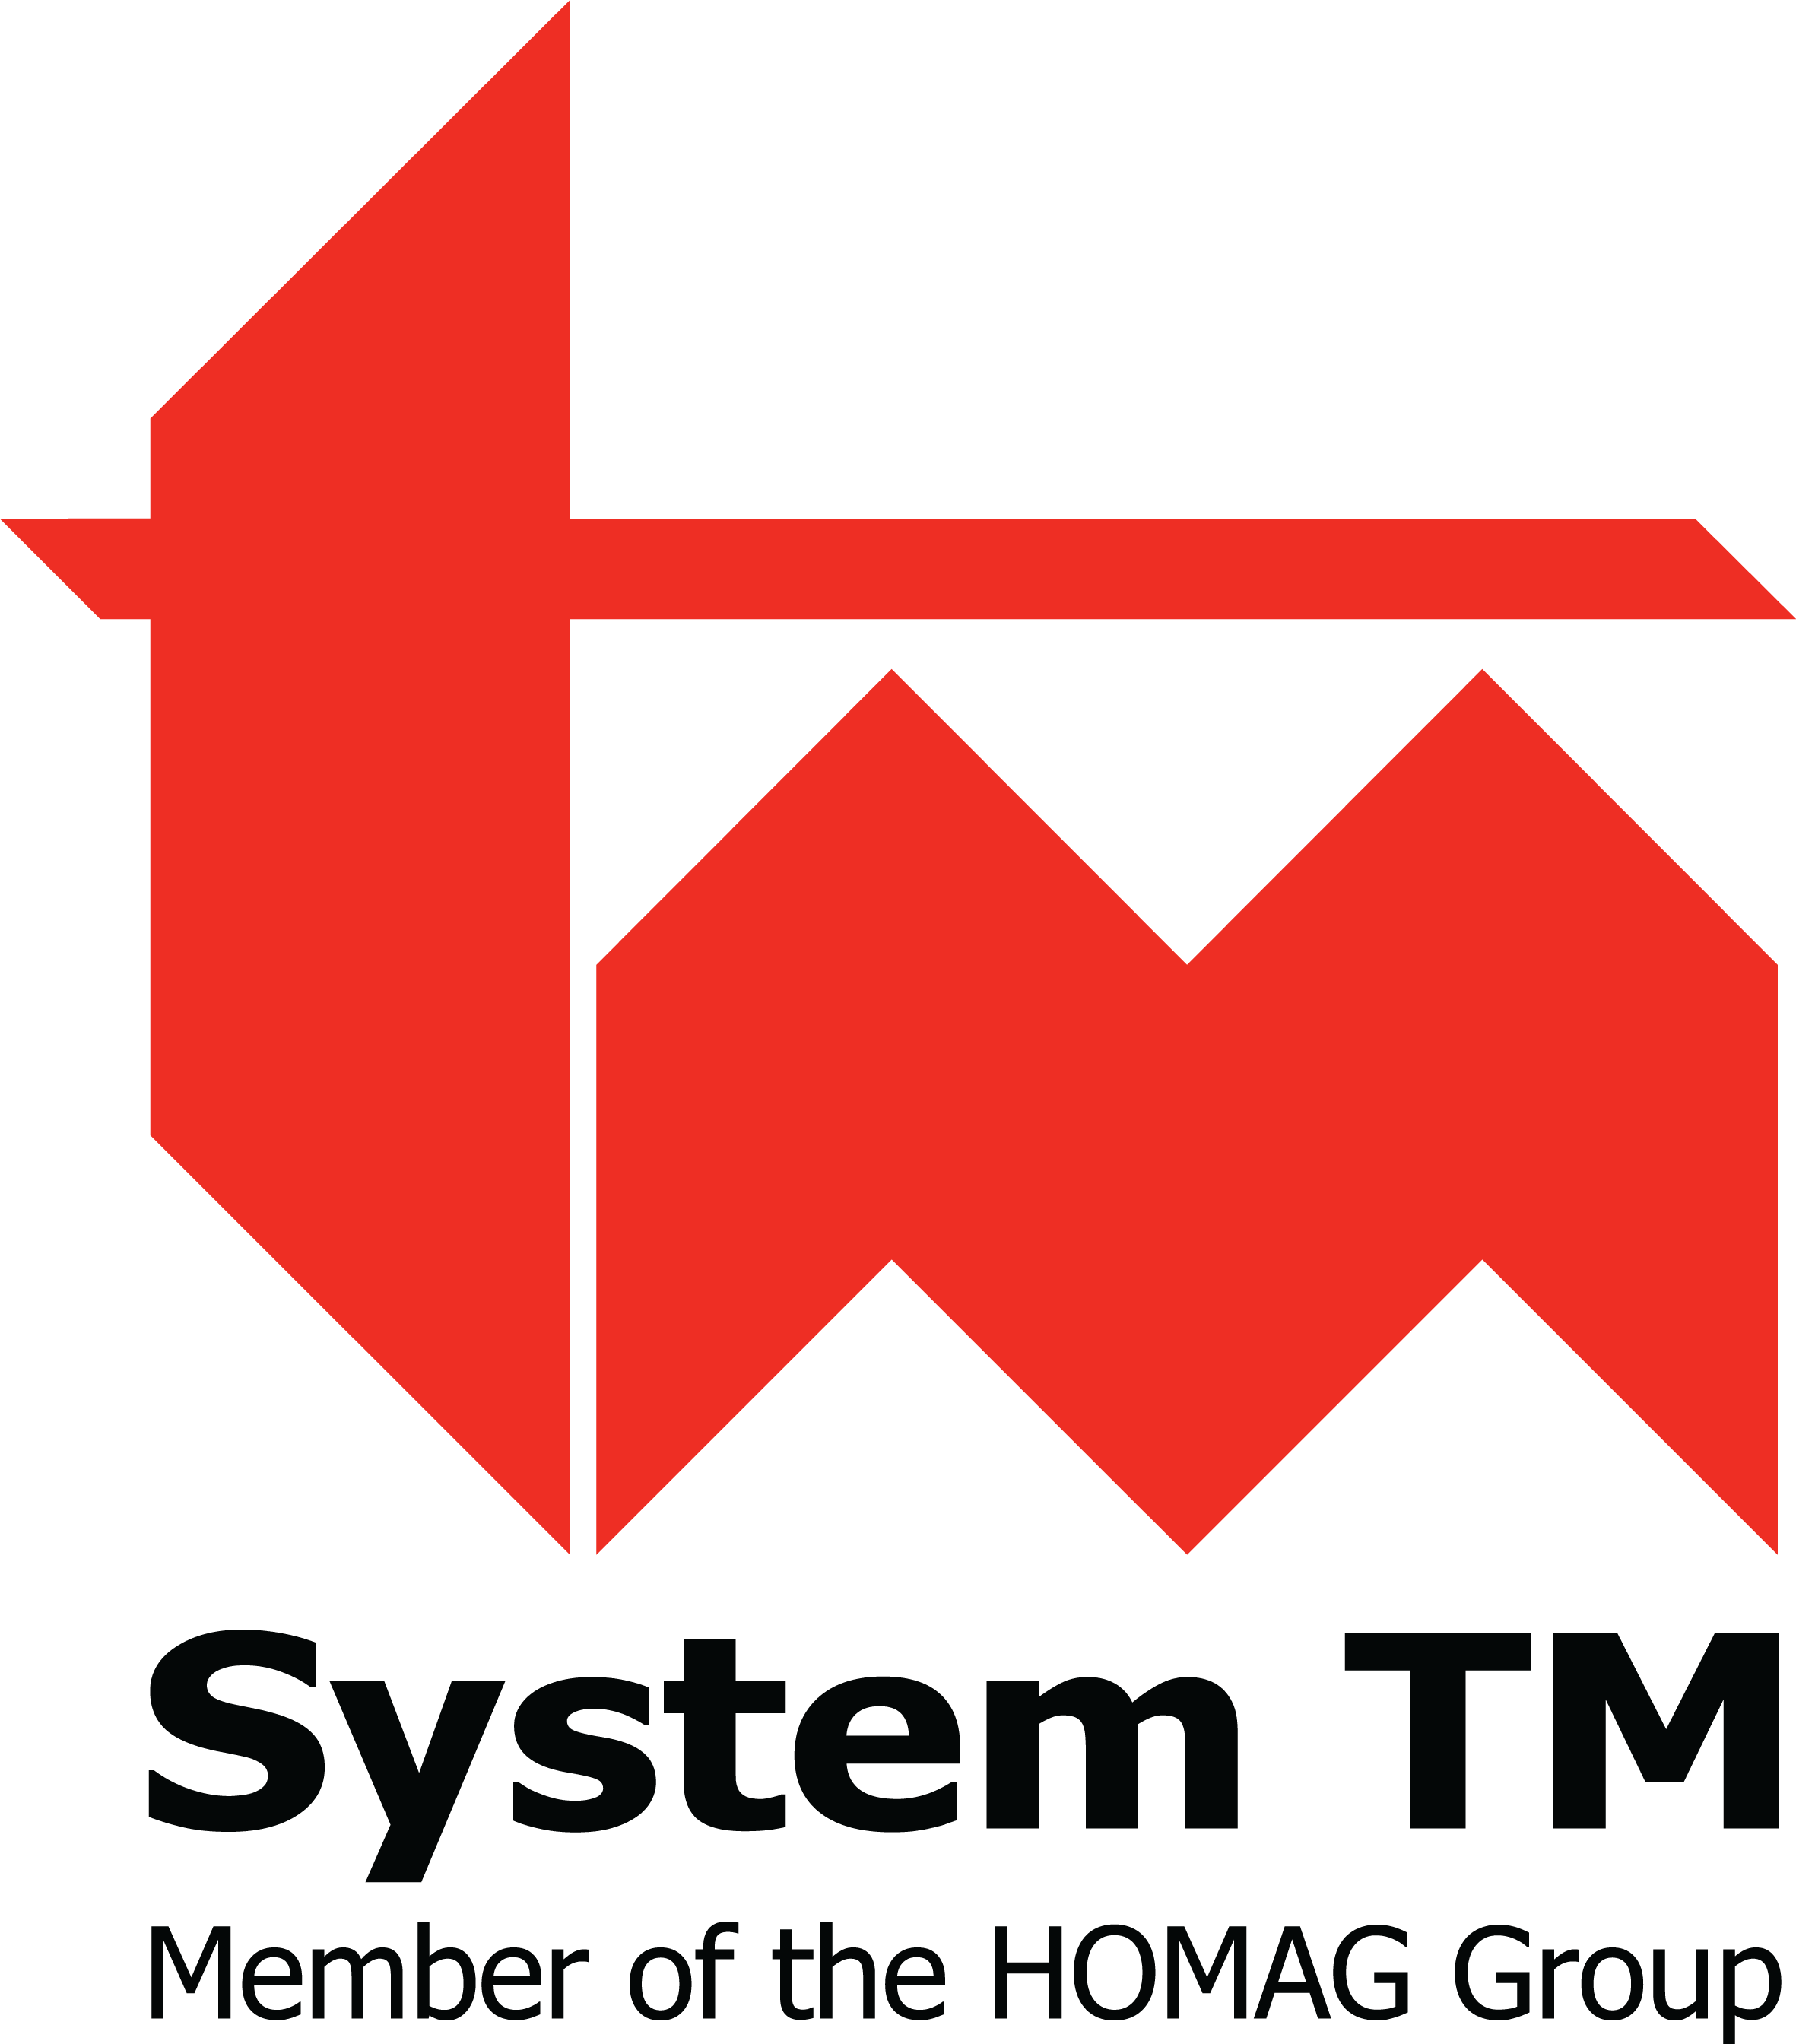 System TM